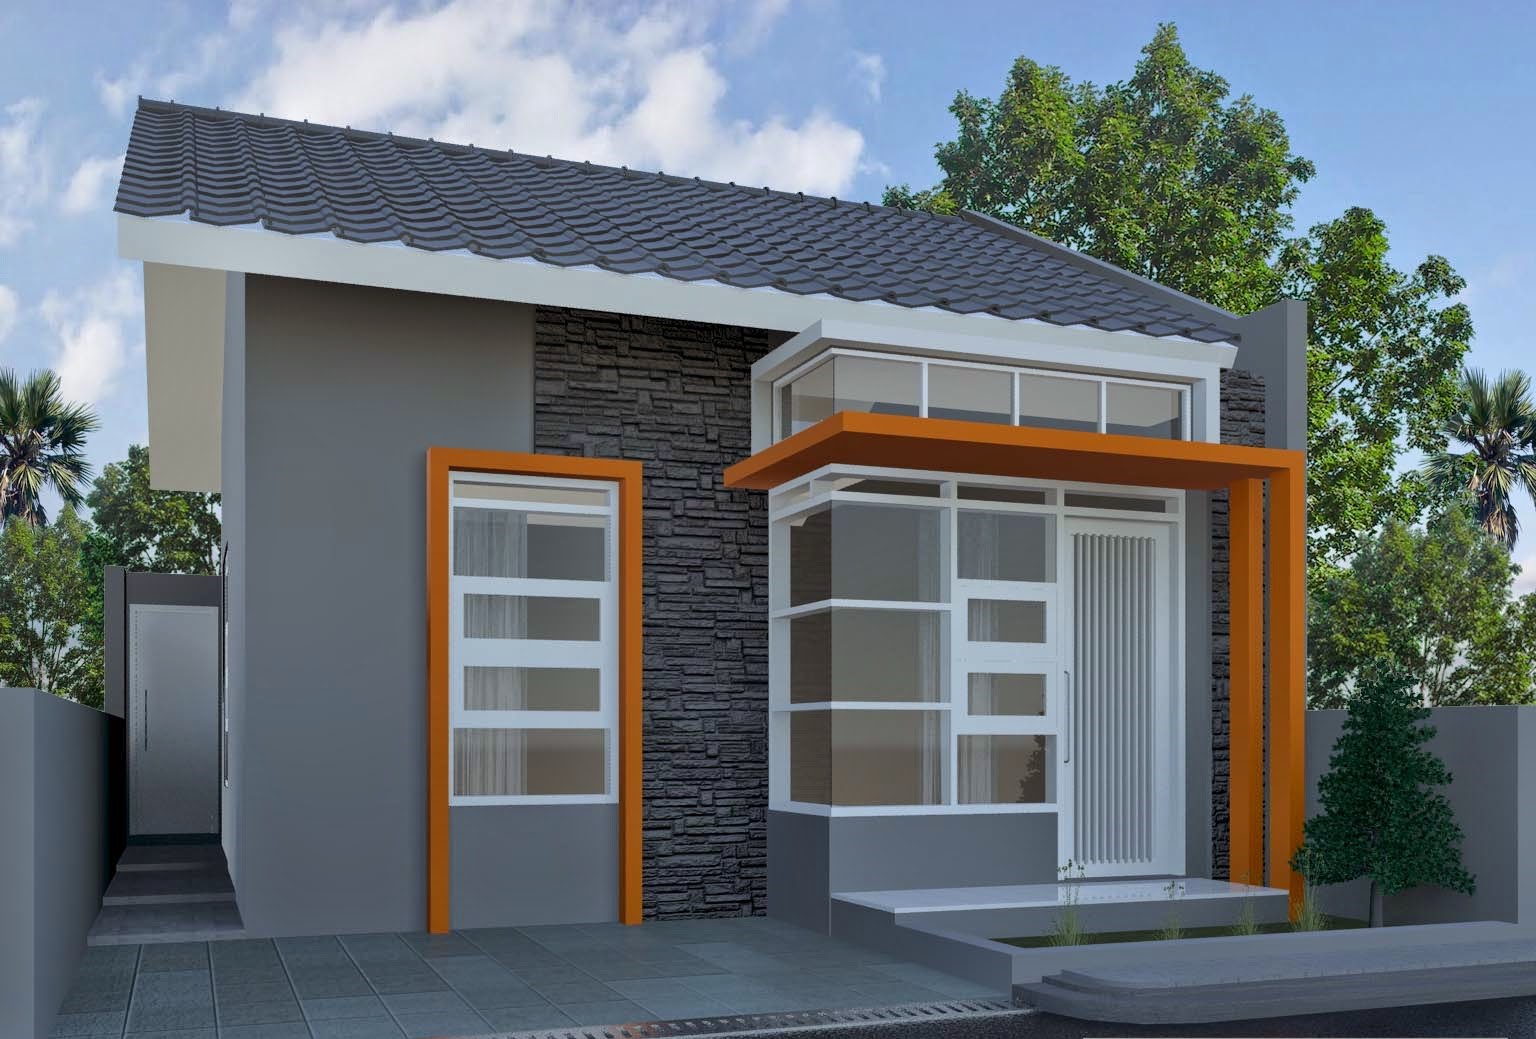 21 Model Rumah Sederhana Tapi Kelihatan Mewah Terbaru 2020 ...